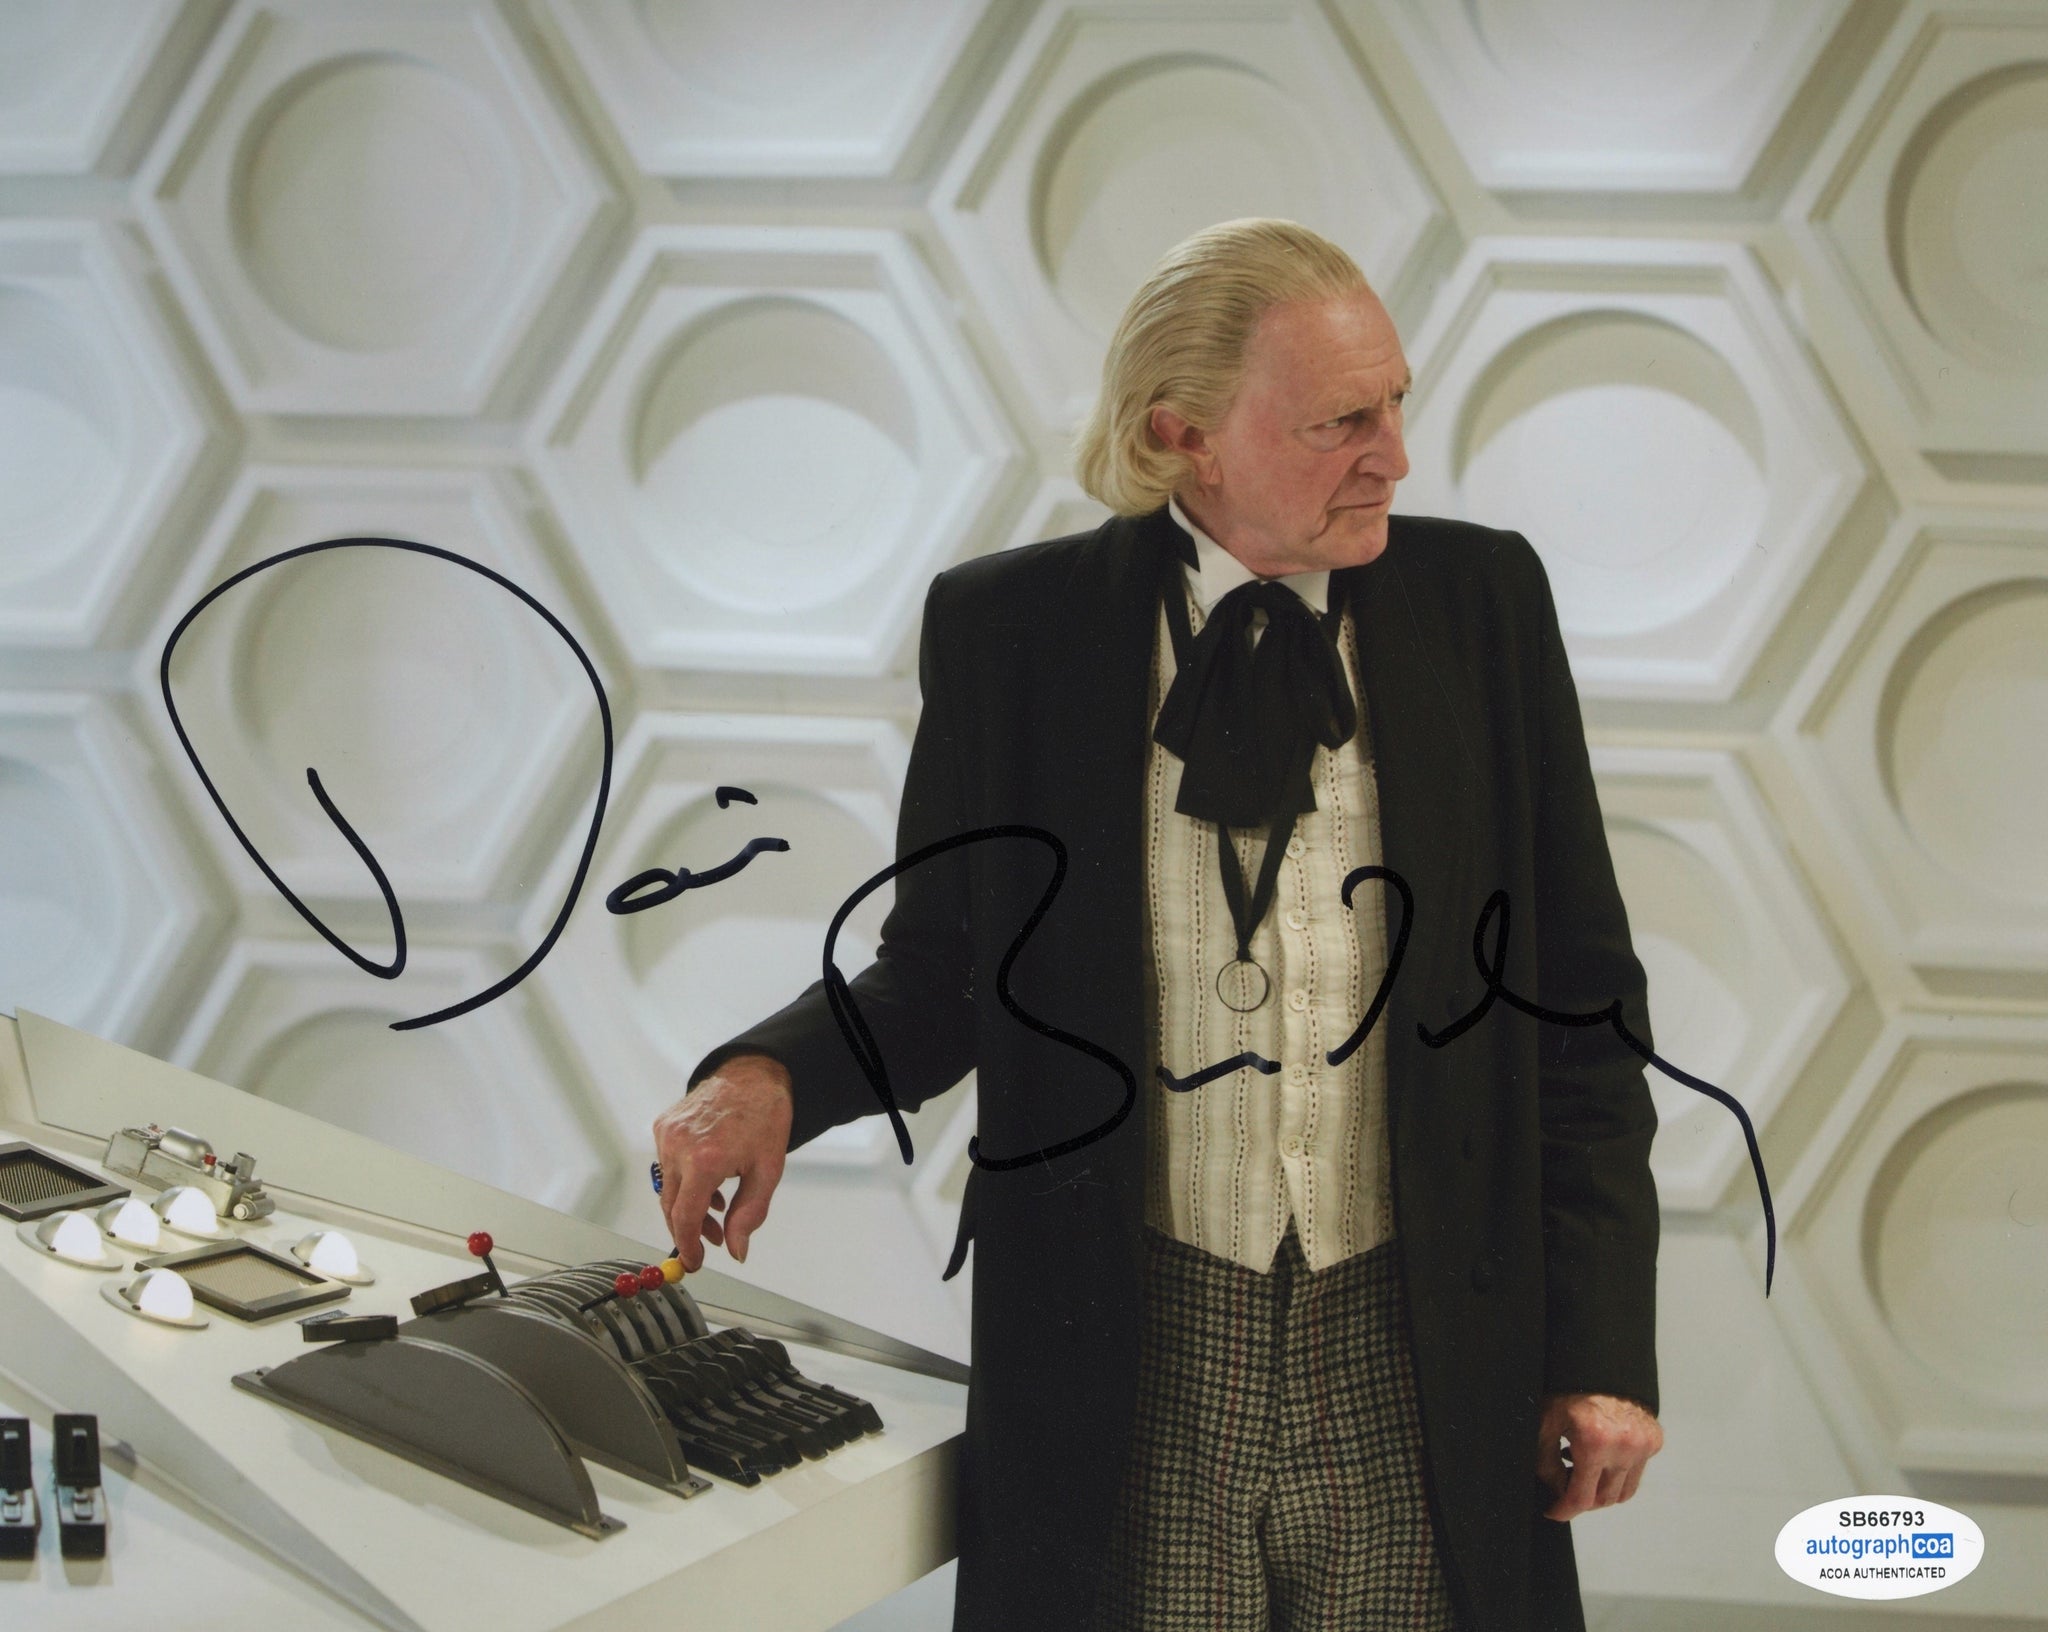 David Bradley Doctor Who Signed Autograph 8x10 Photo ACOA